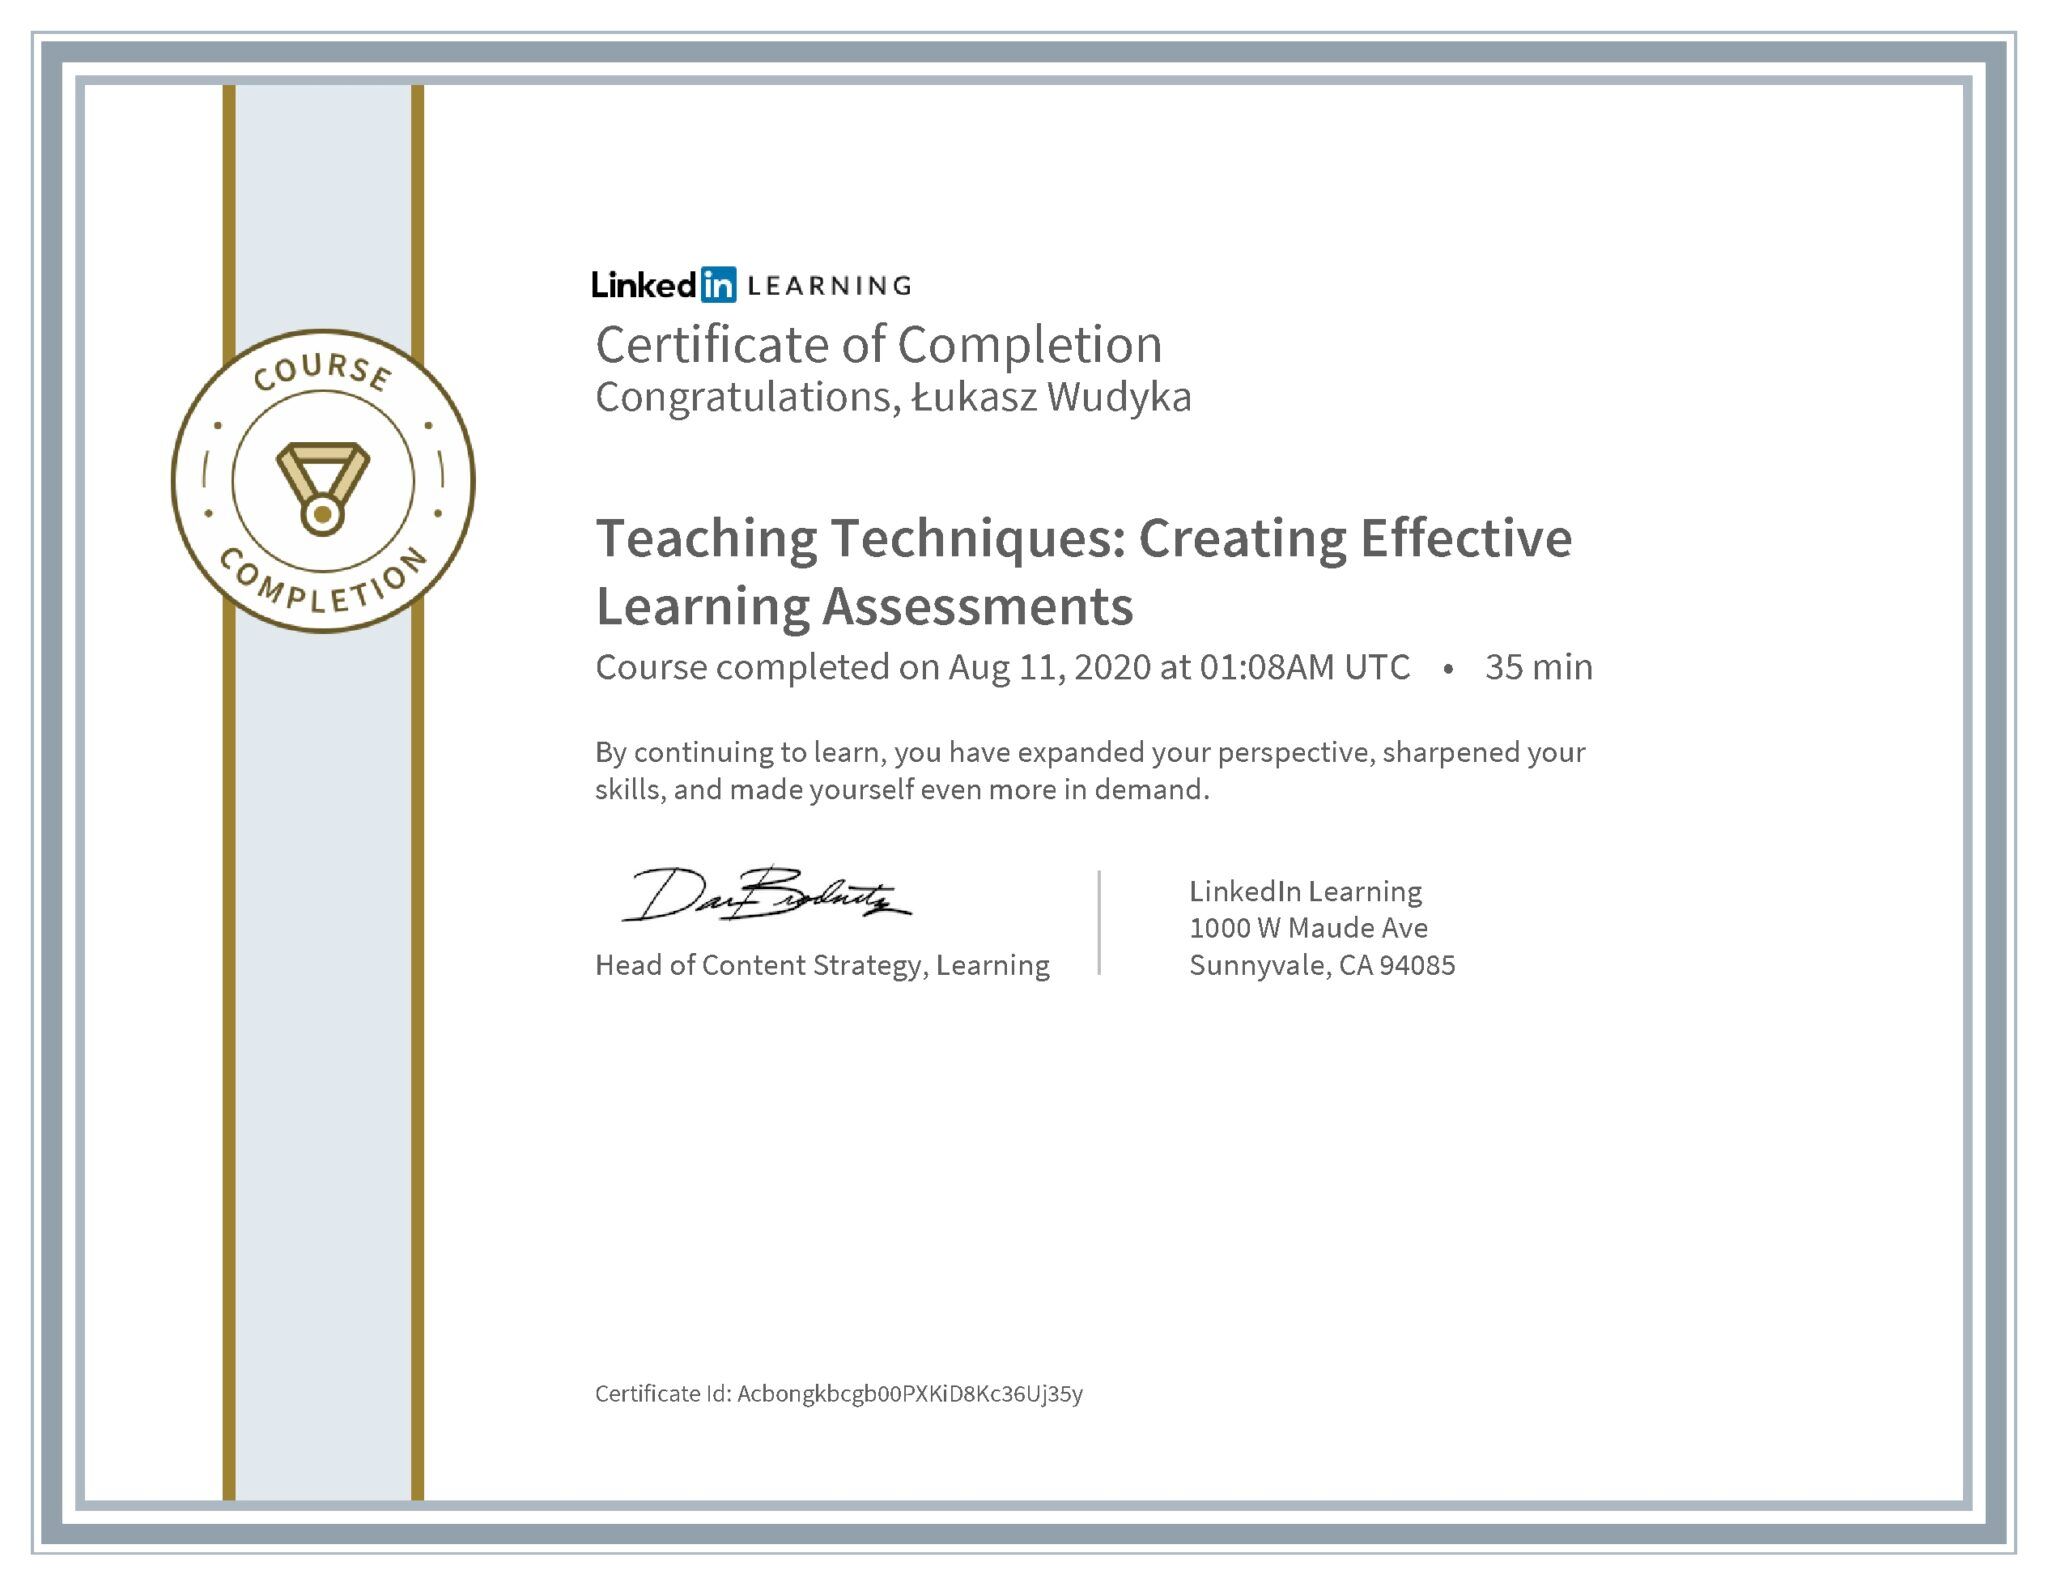 Łukasz Wudyka certyfikat LinkedIn Teaching Techniques: Creating Effective Learning Assessments